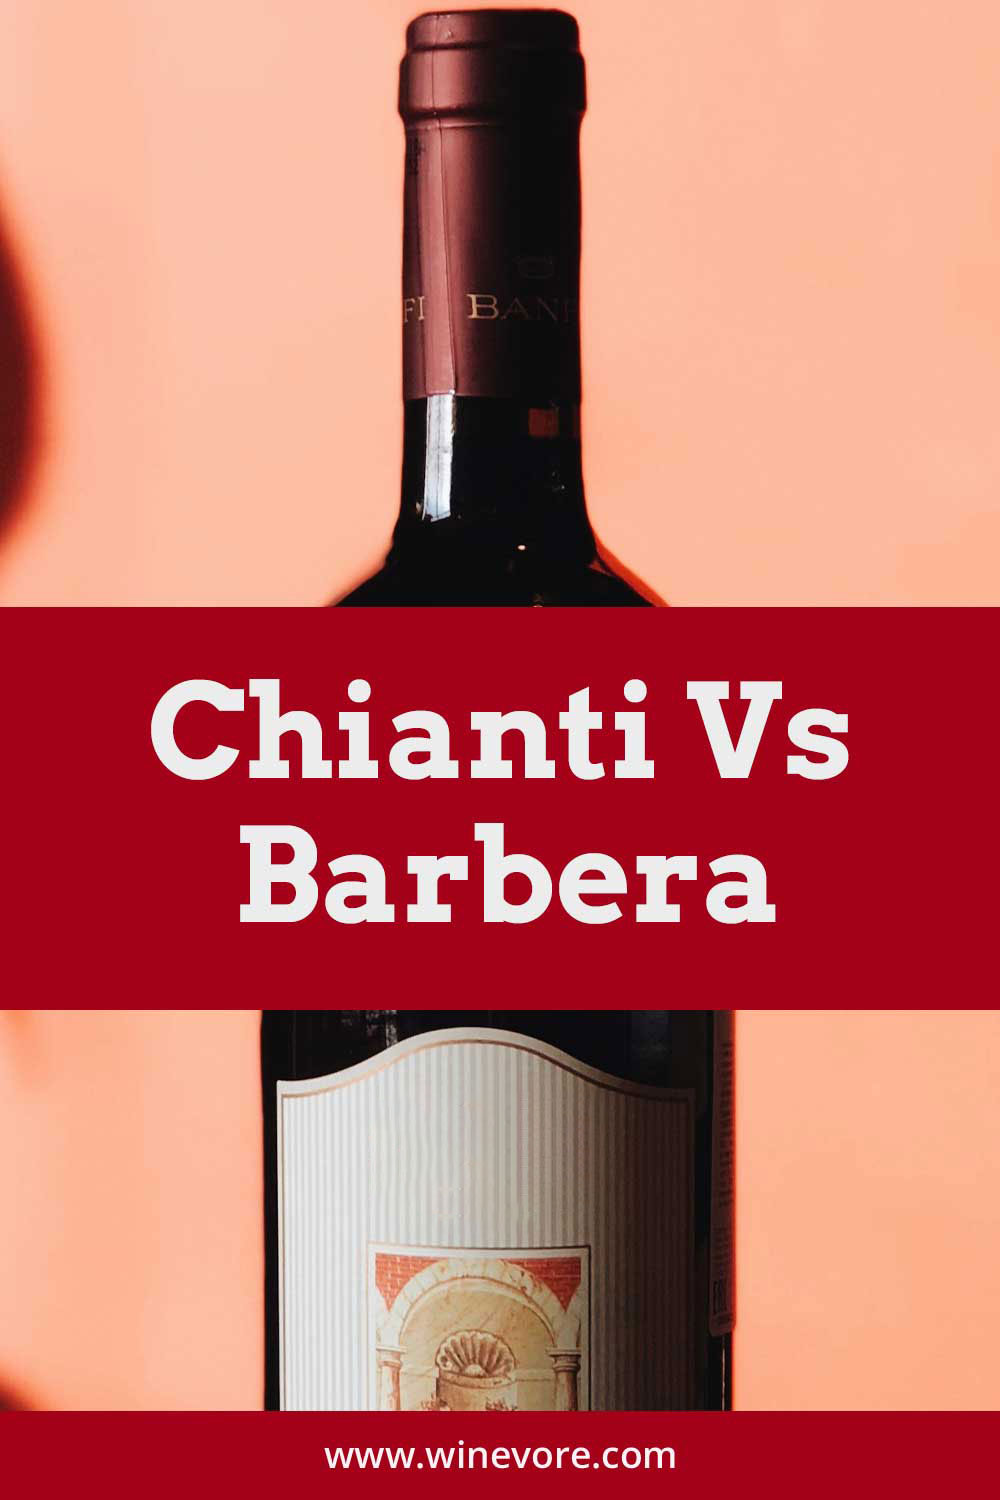 Sealed wine bottle - Chianti Vs. Barbera.